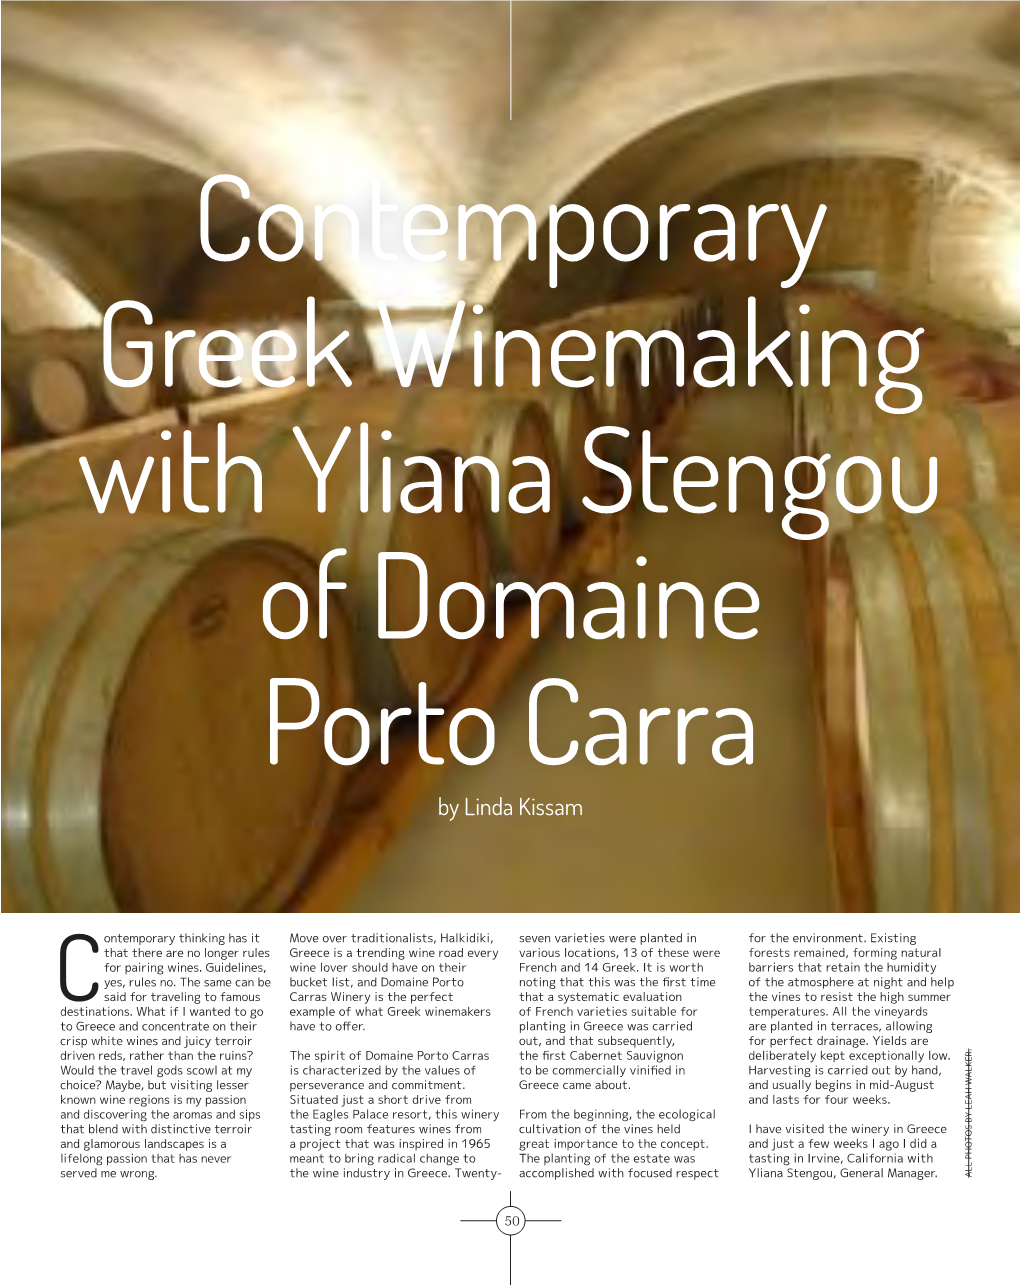 Contemporary Greek Winemaking with Yliana Stengou of Domaine Porto Carra by Linda Kissam